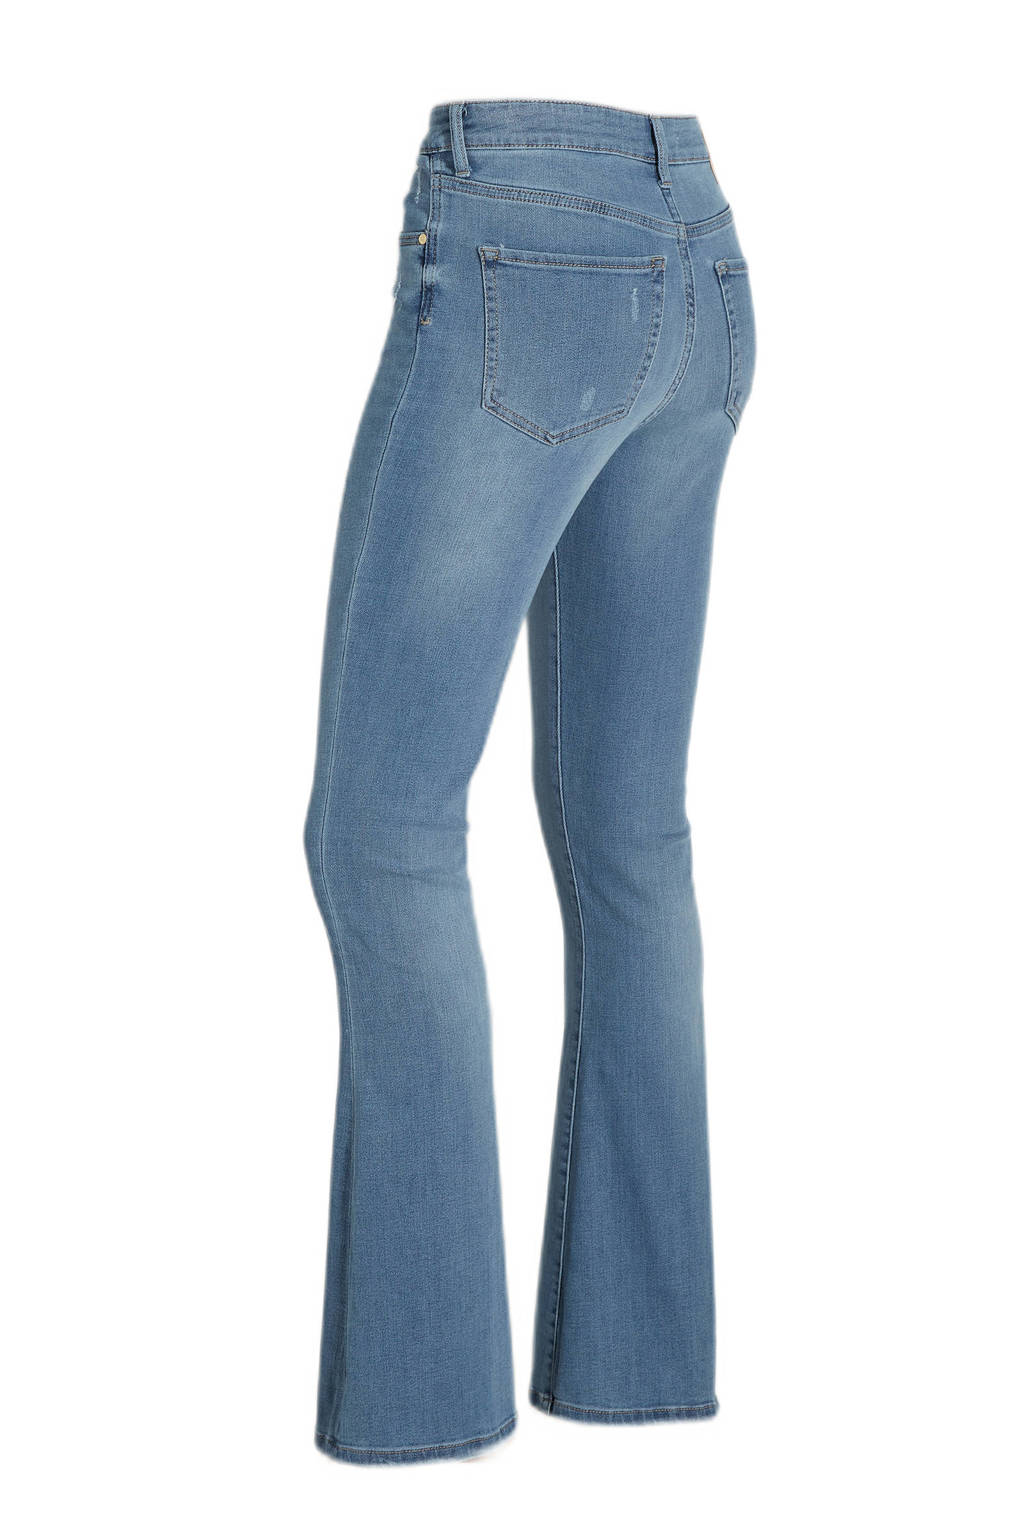 Raizzed high waist flared jeans Sunrise Slit vintage blue